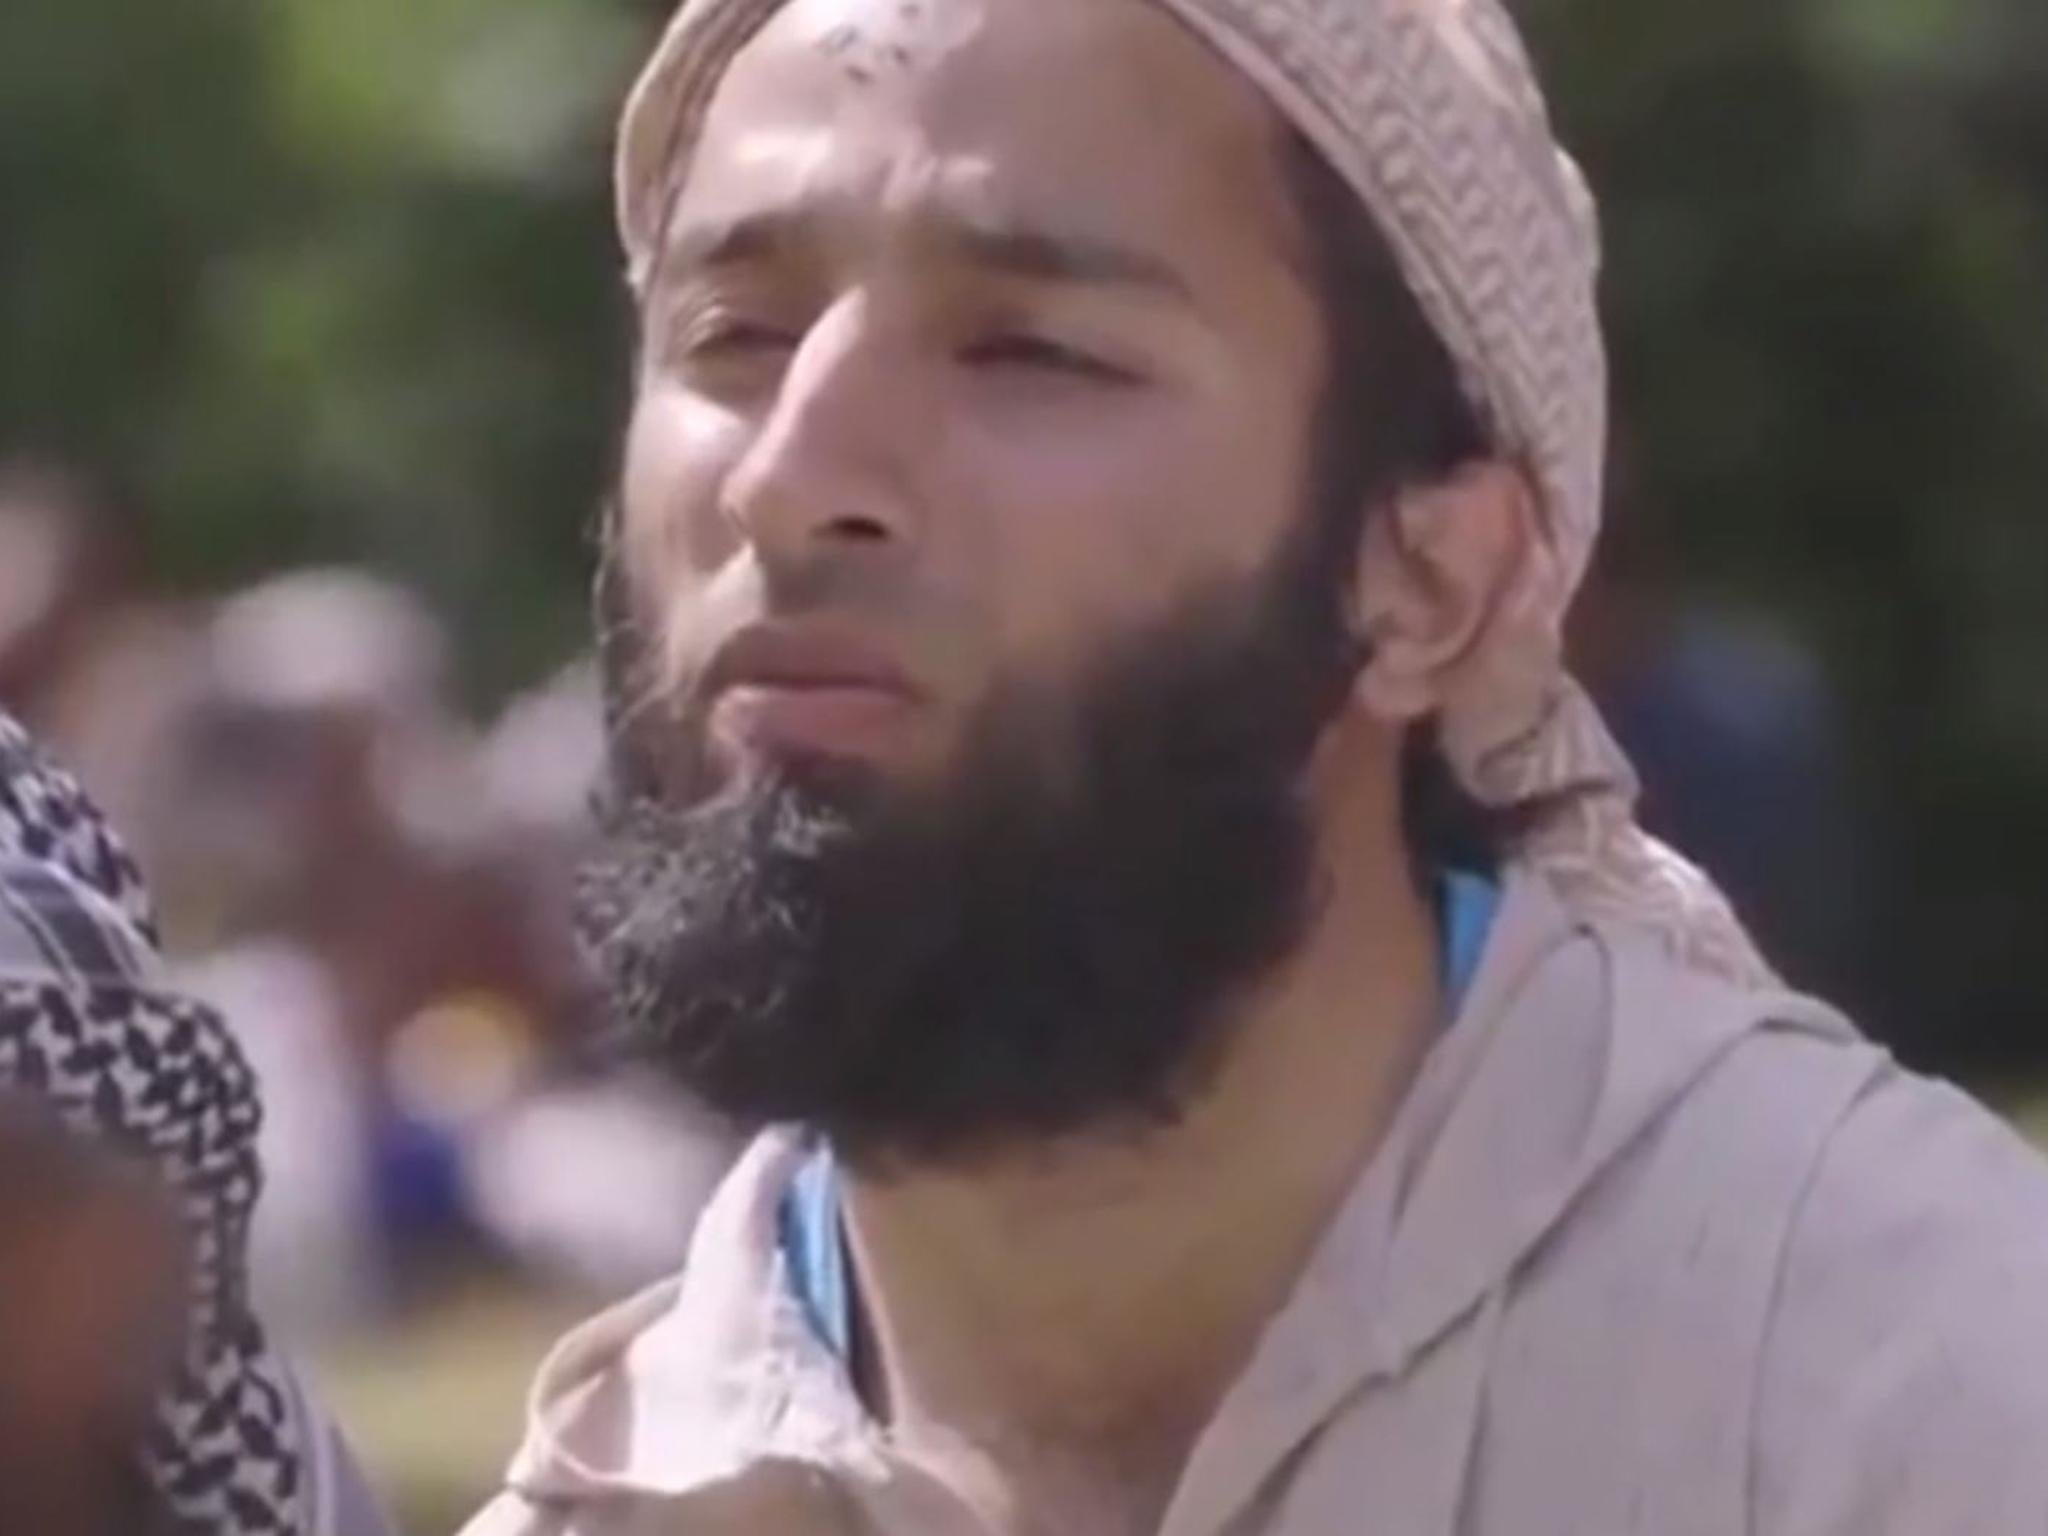 London Bridge attacker Khuram Shazad Butt, also known as 'Abz', in Channel 4's 'The Jihadis Next Door' in 2016